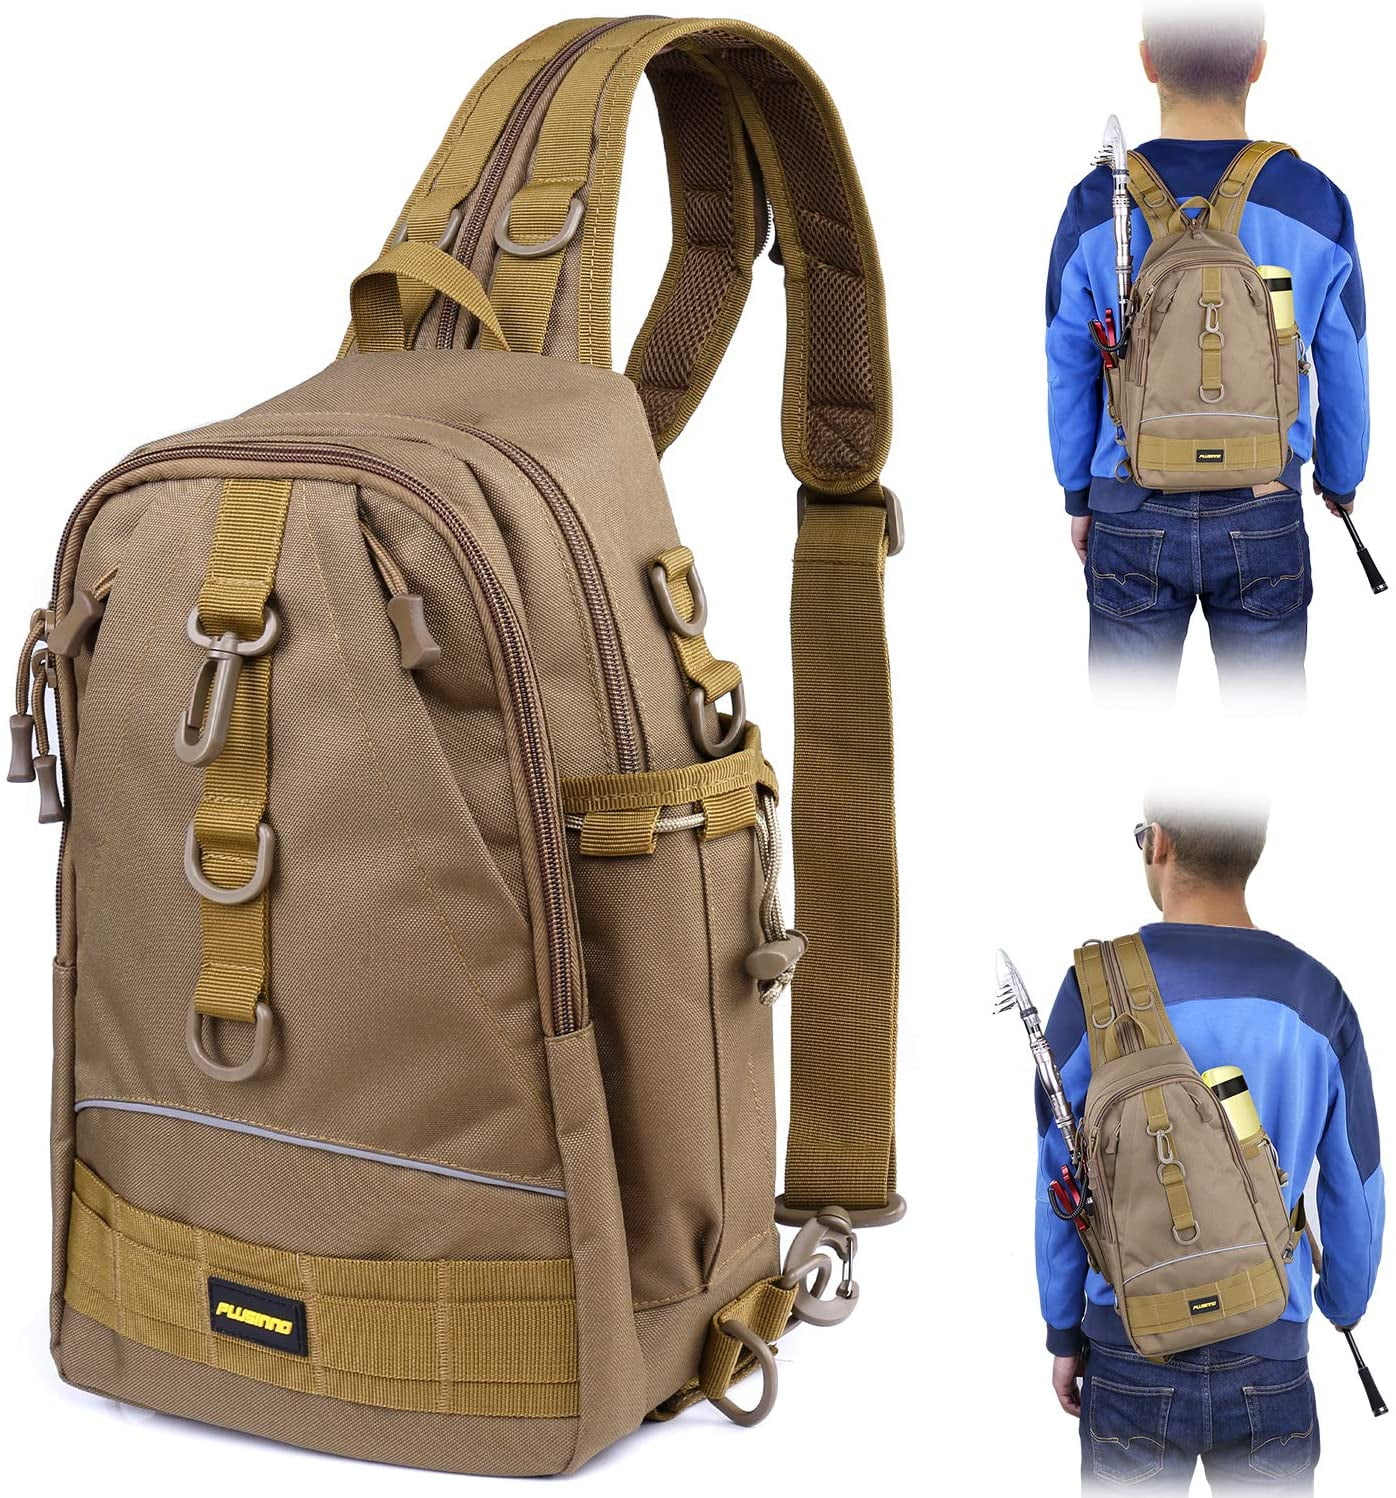 Buy PLUSINNO® Outdoor Sports Shoulder Bag Fishing Tackle Storage